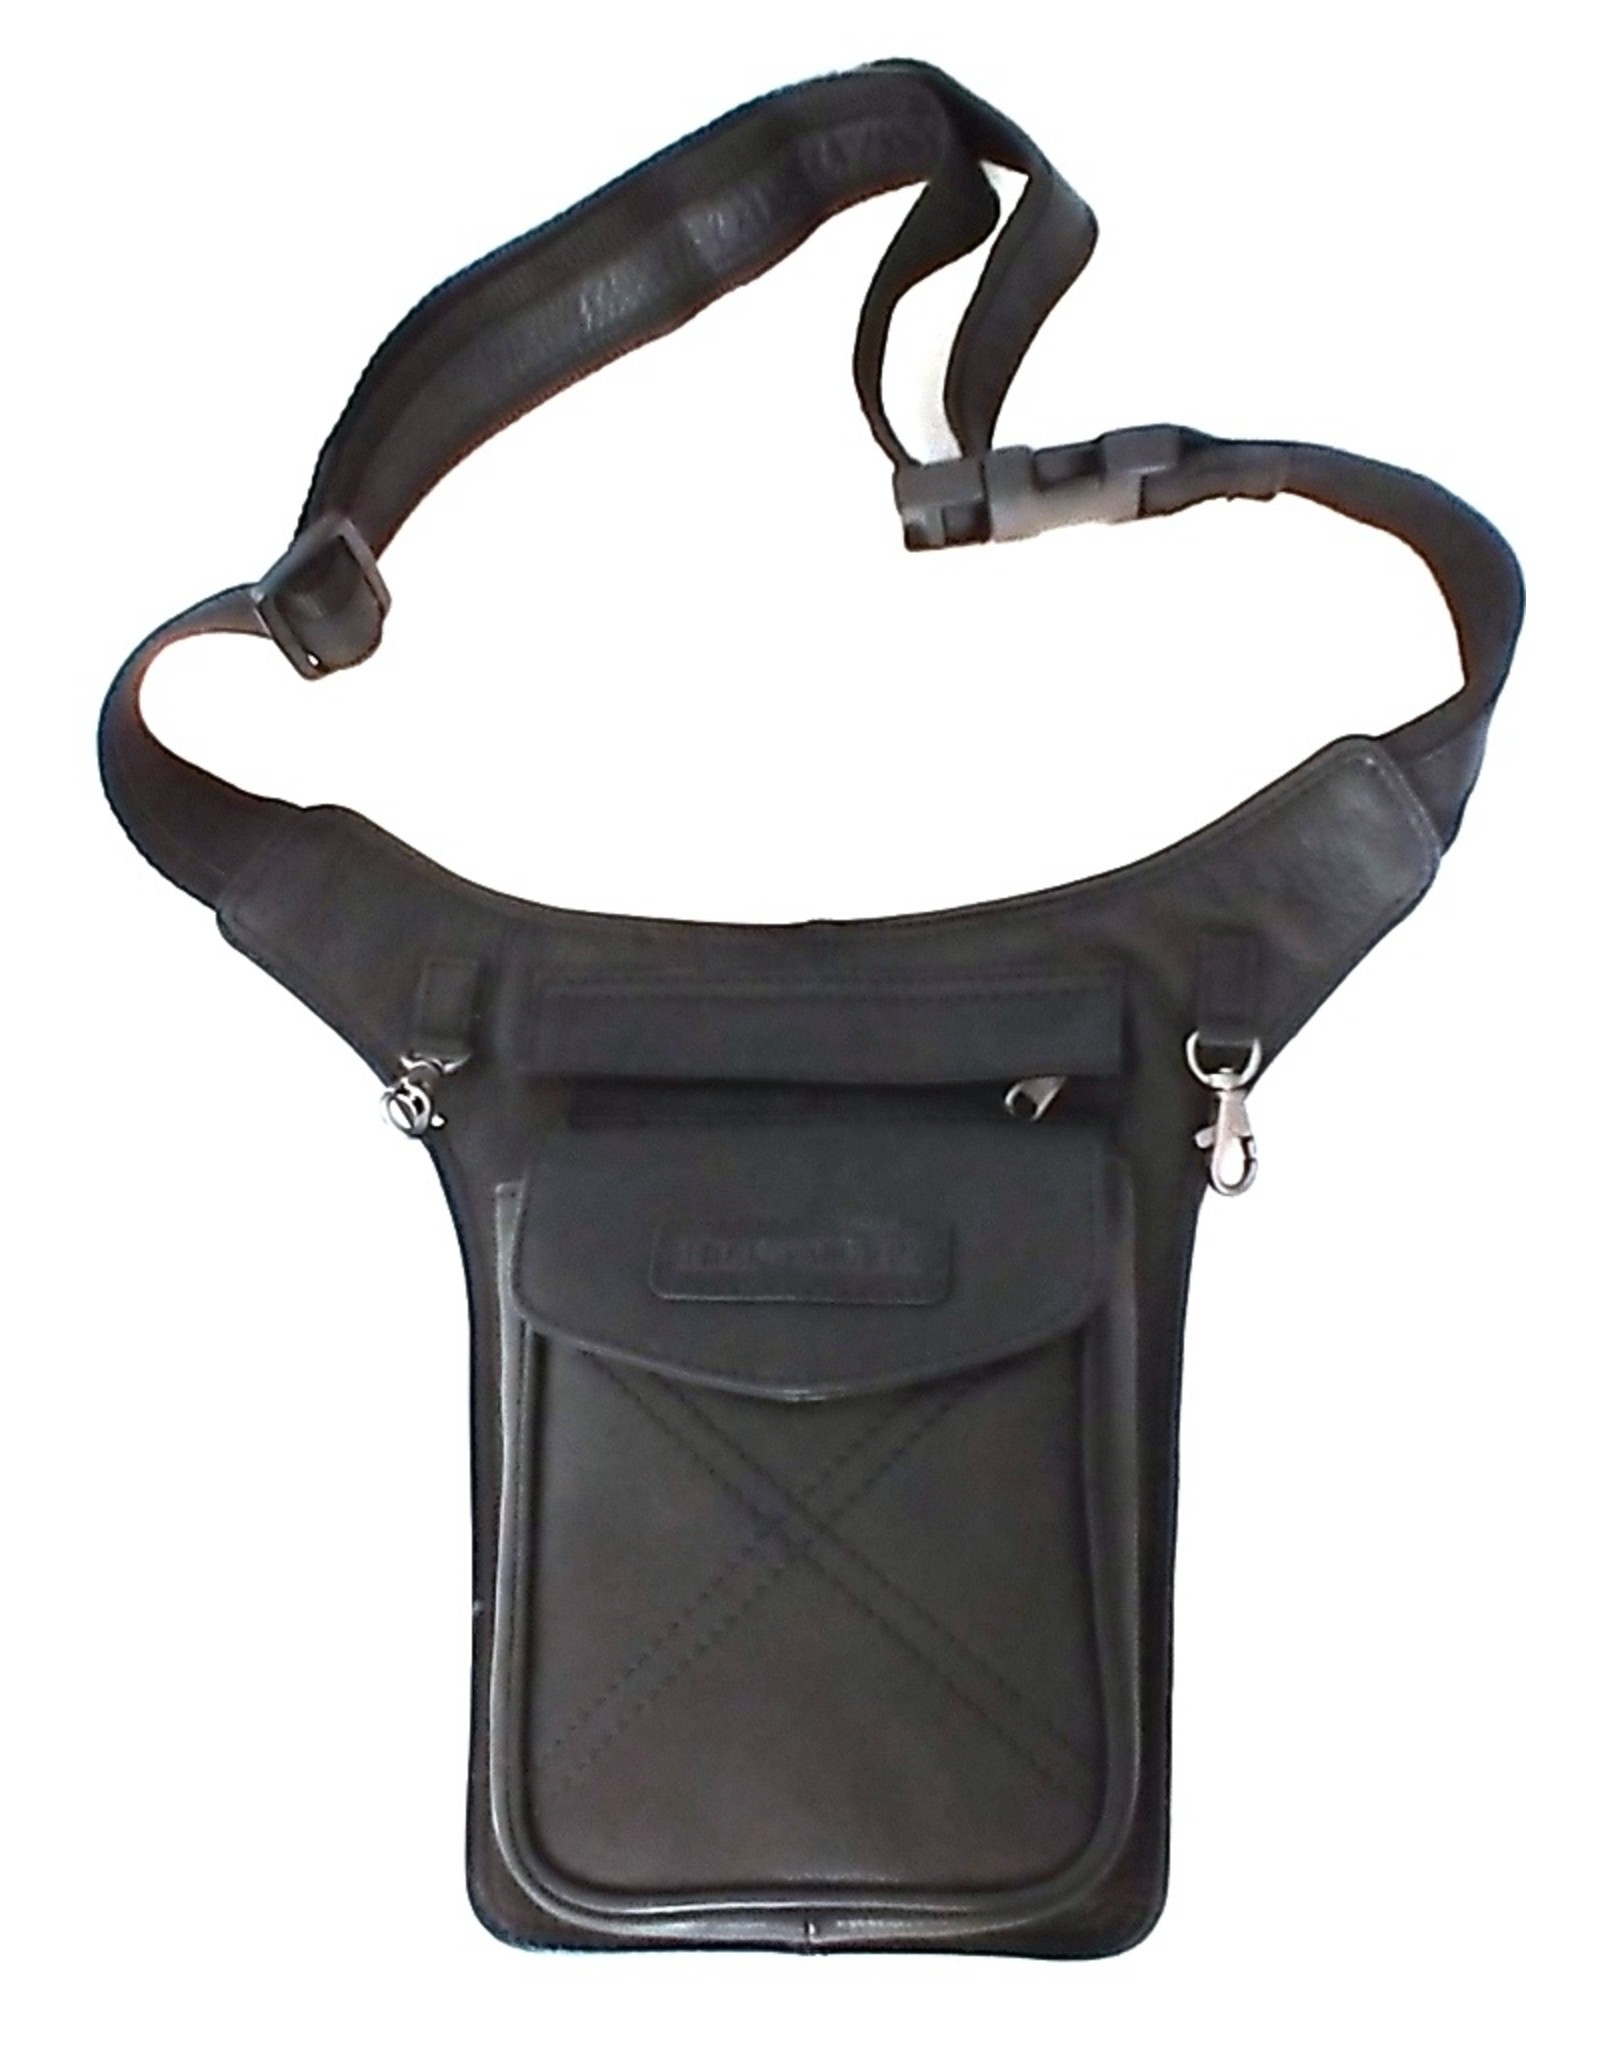 HillBurry Leather bags - HillBurry Leather Waist bag black